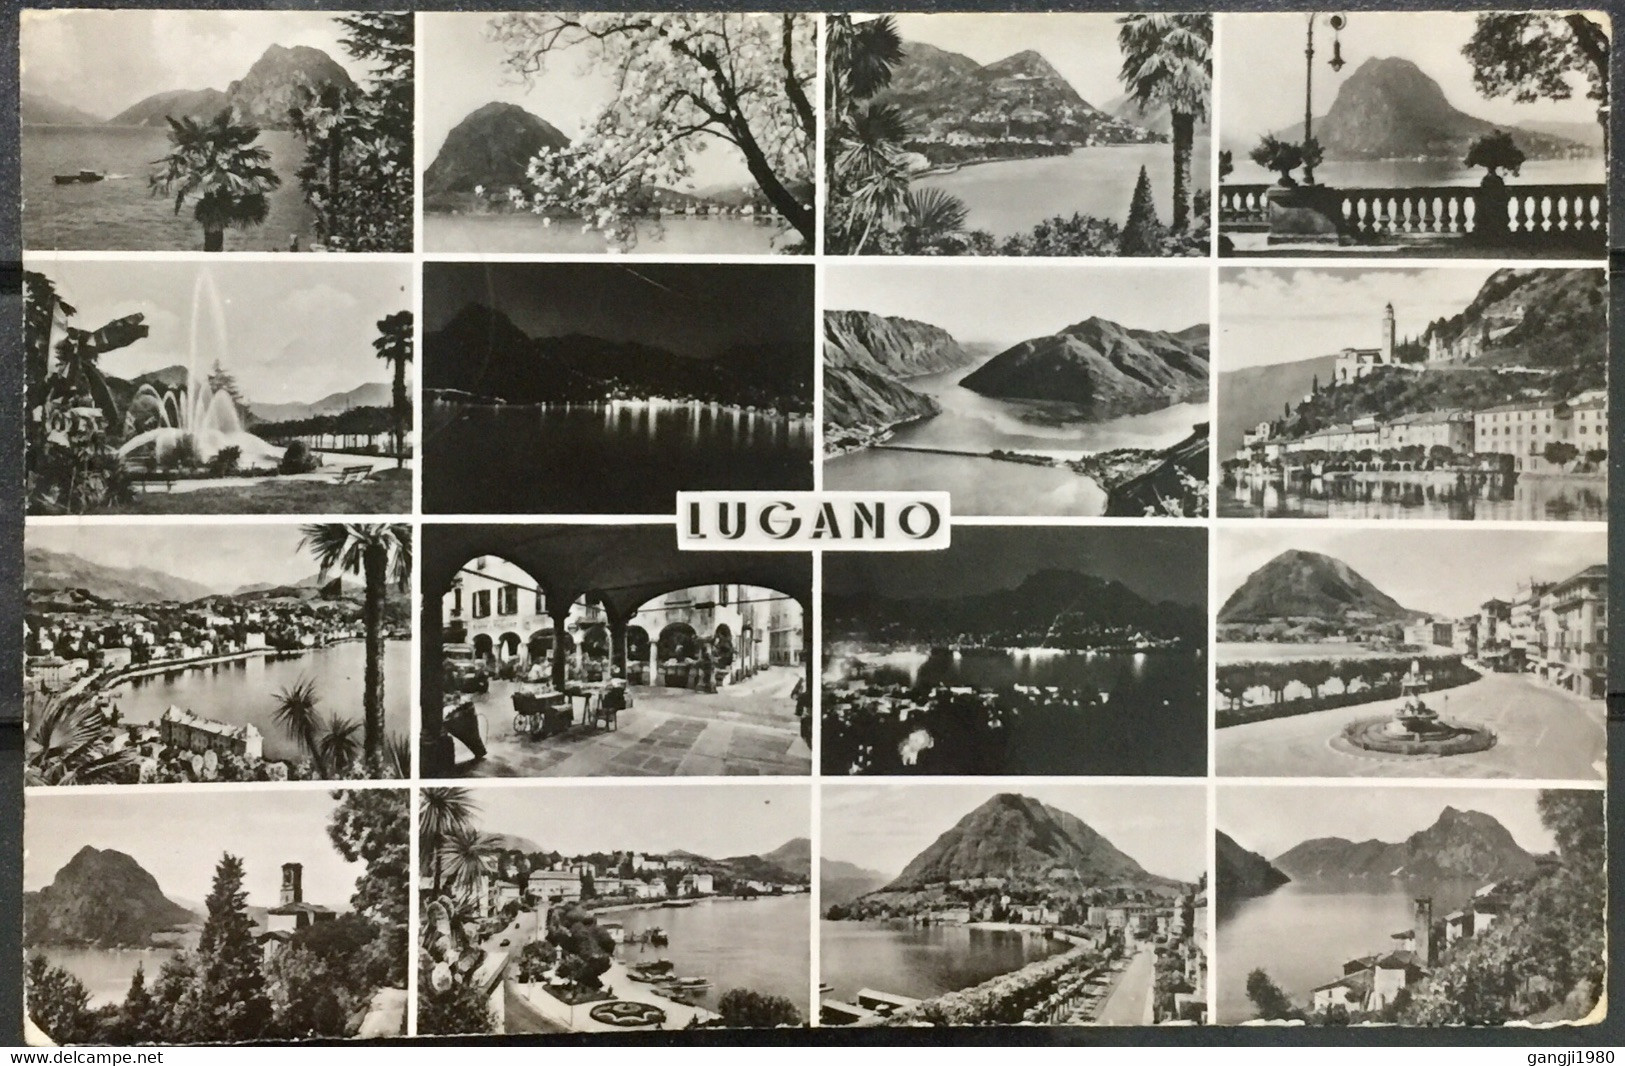 SWITZERLAND ,LUGANO 16 VIEWS IMAGED - Swaziland